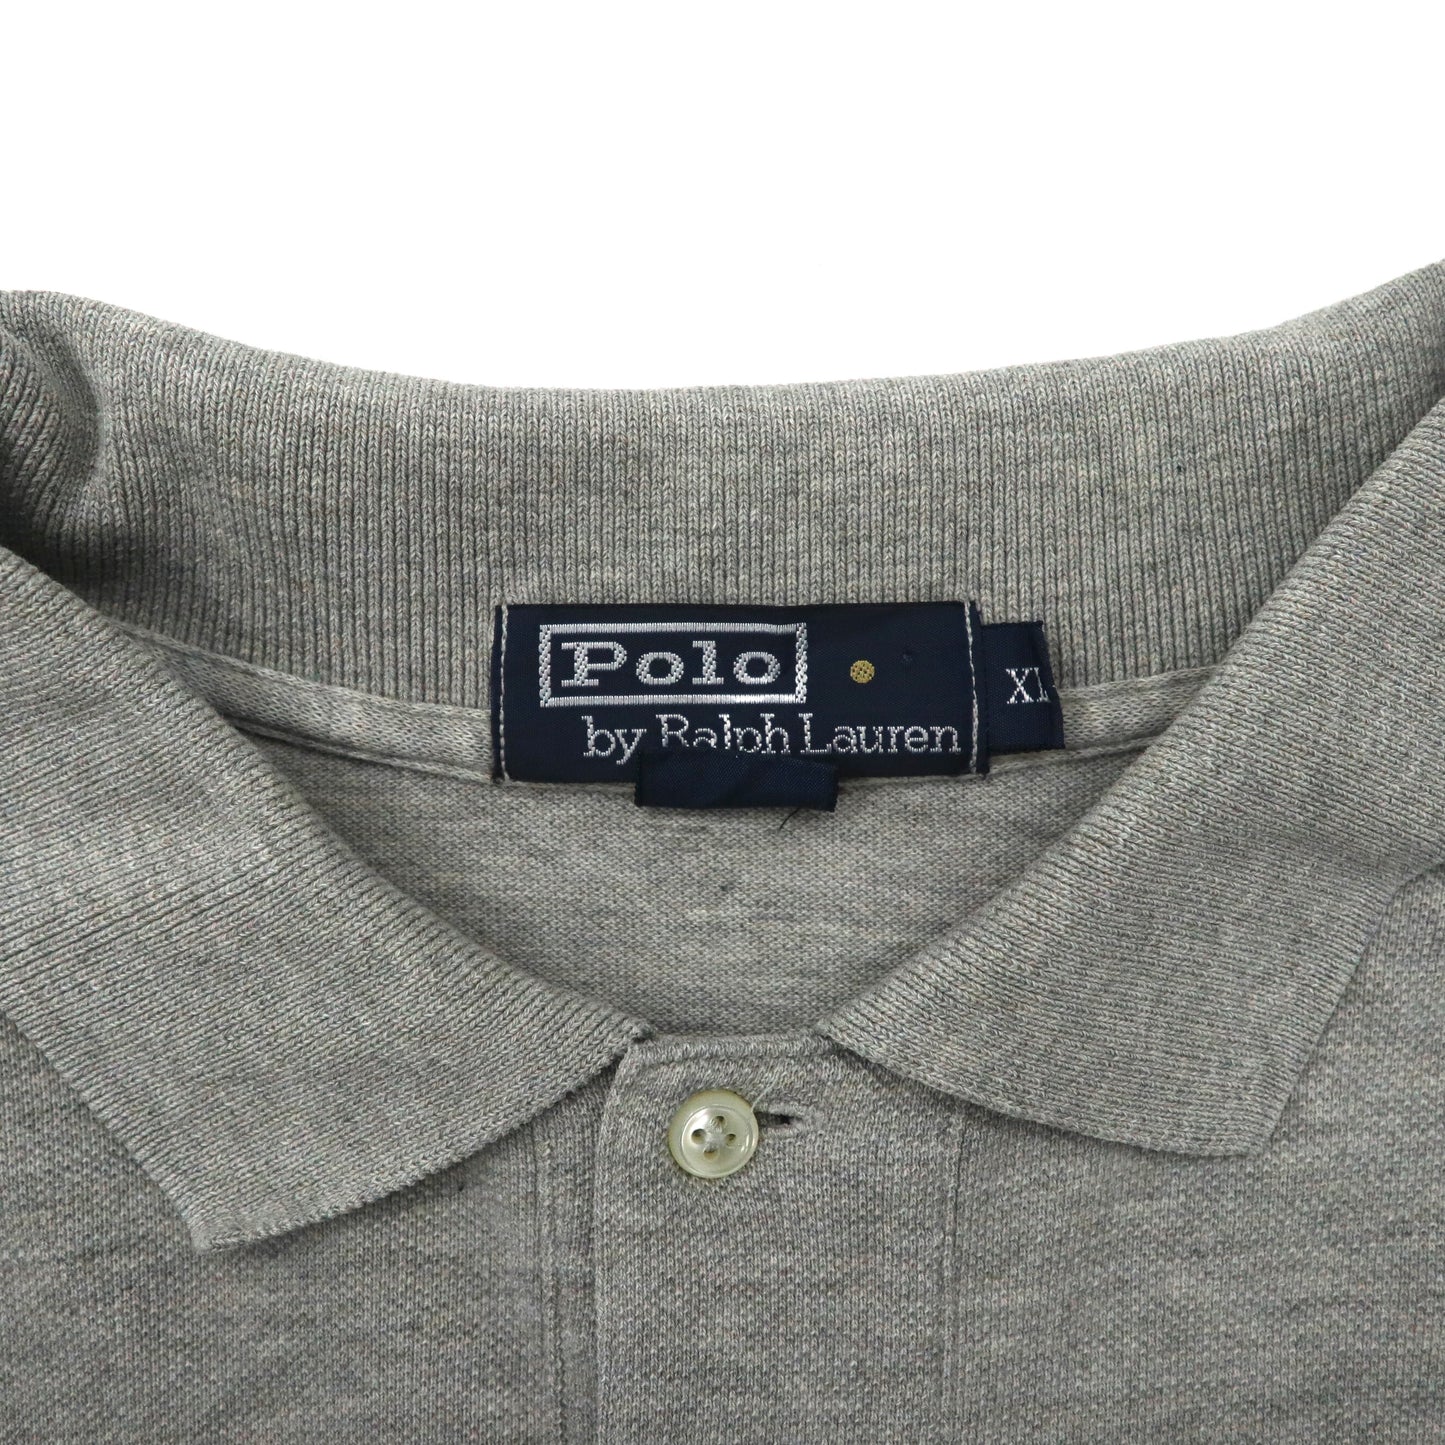 Polo by Ralph Lauren ビッグサイズ 長袖ポロシャツ XL グレー コットン 鹿の子 スモールポニー刺繍